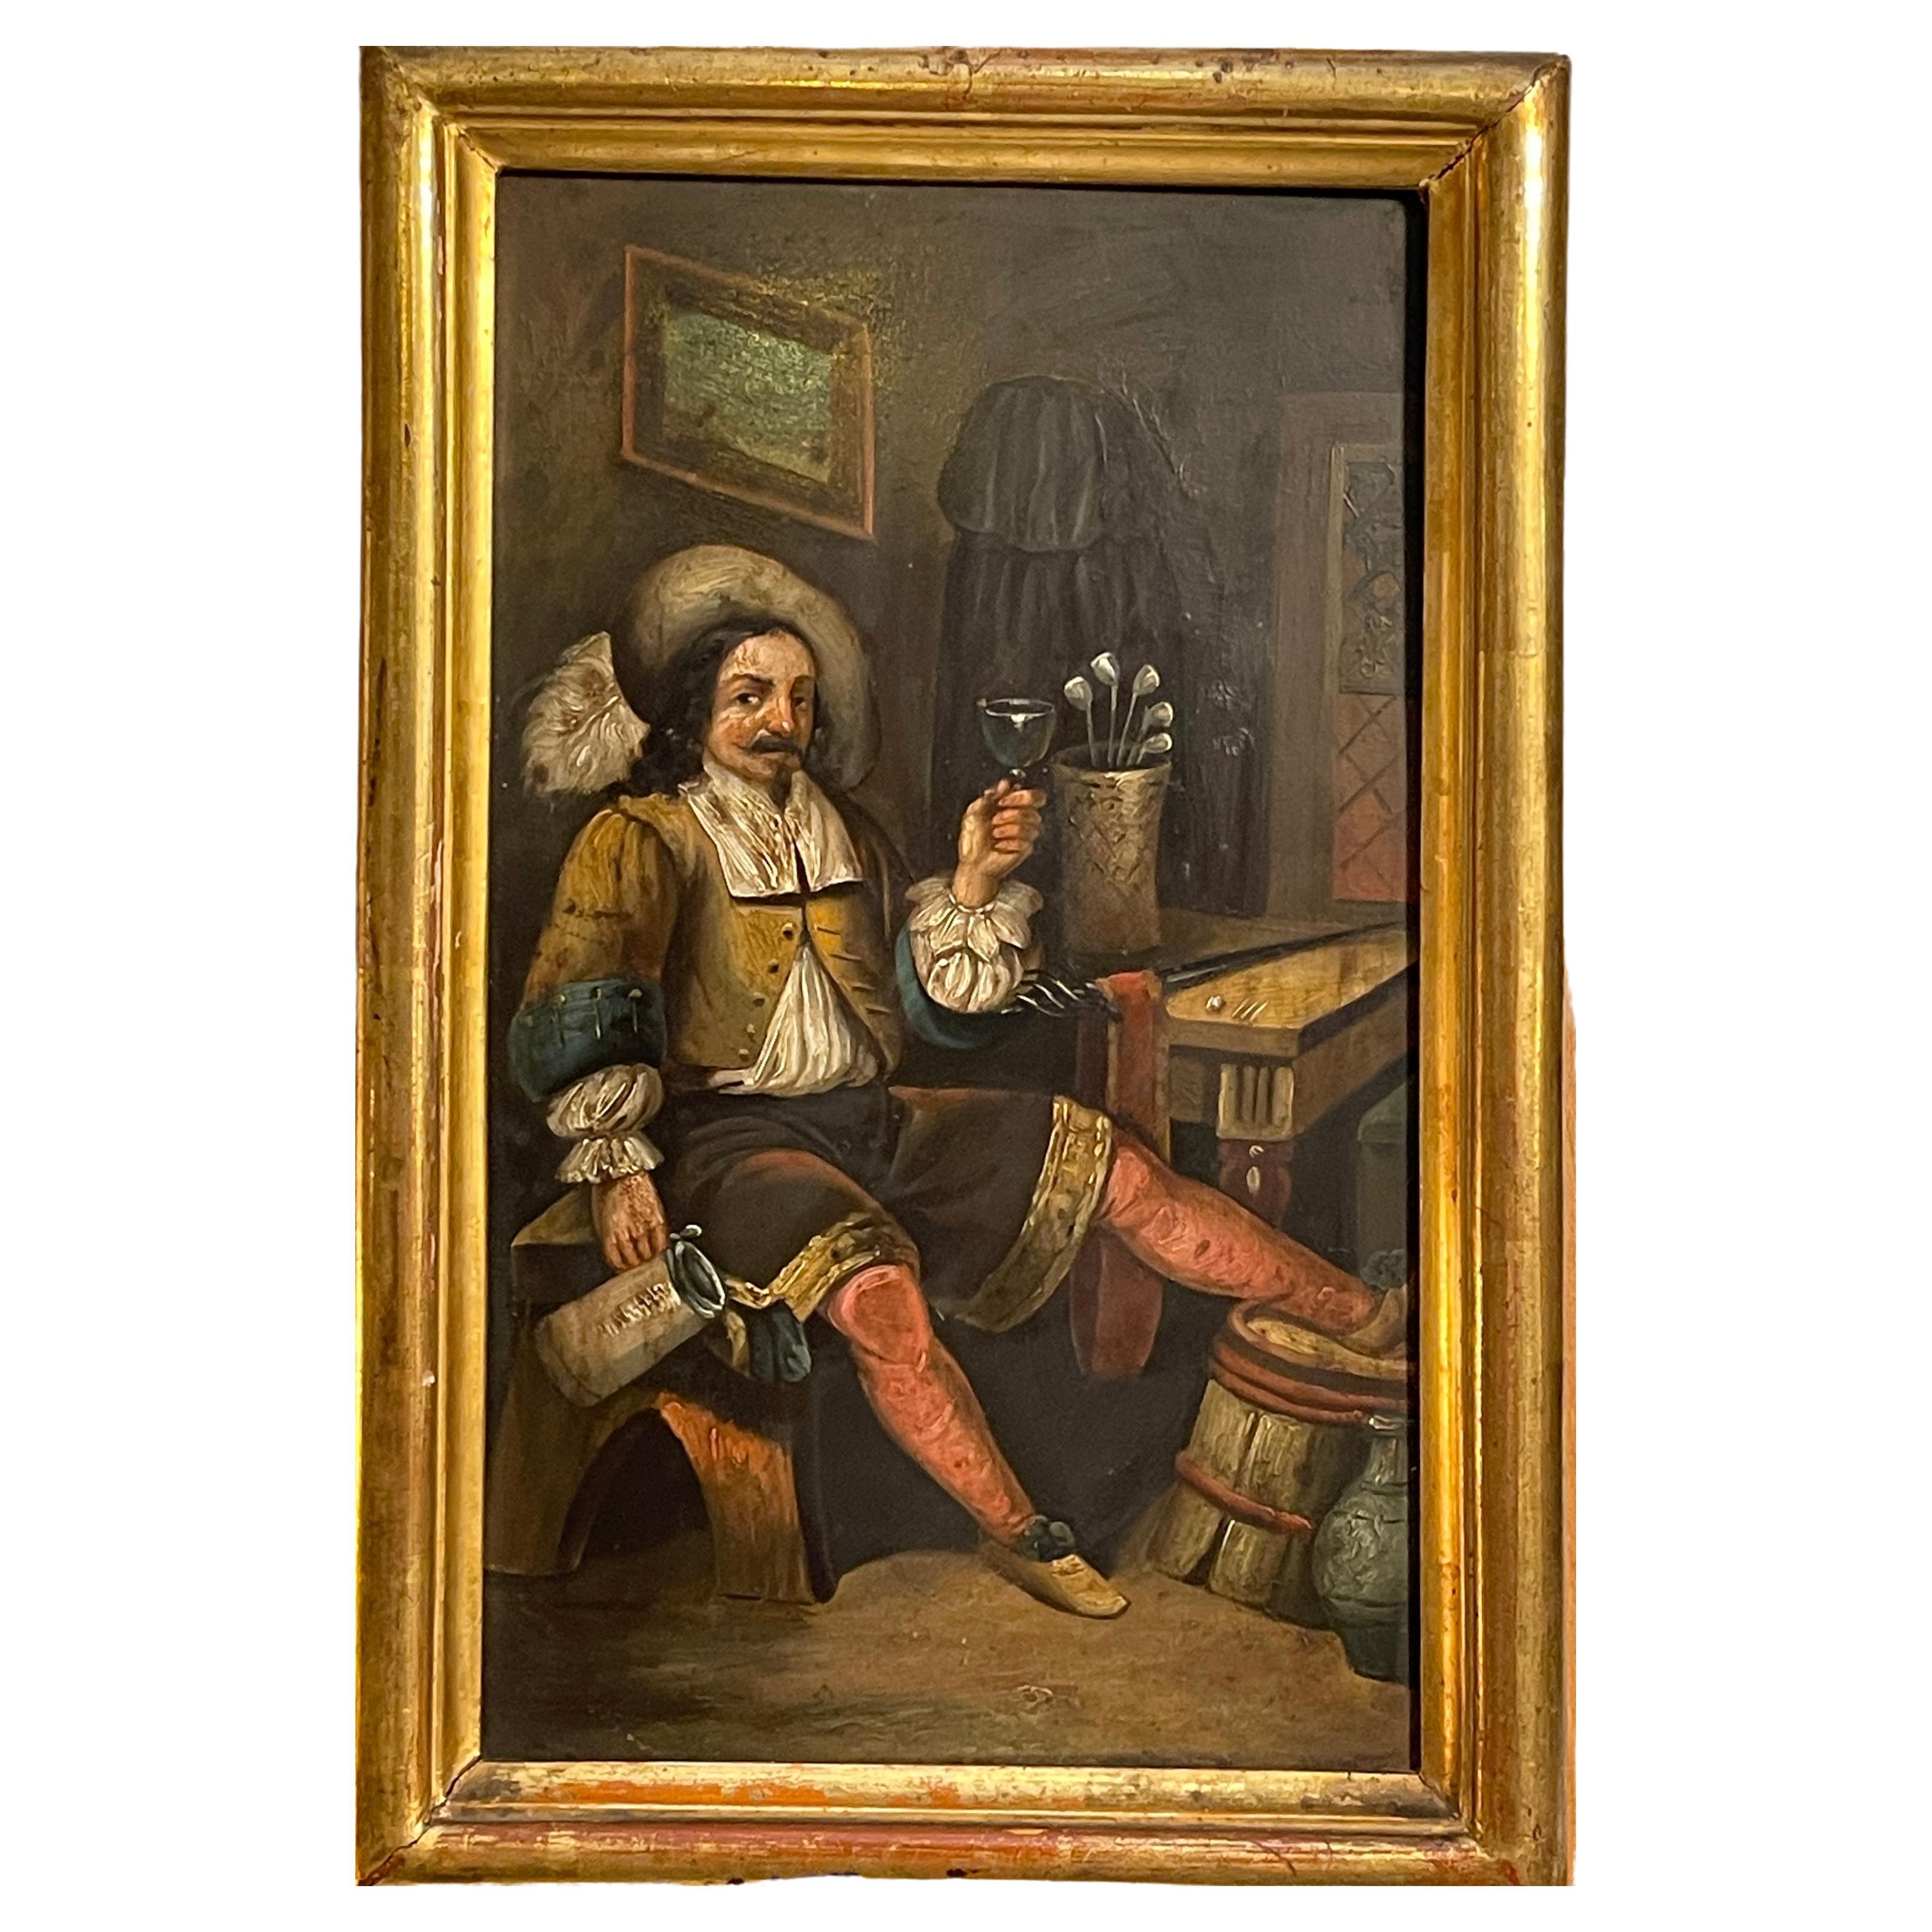 Antique painting on metal, 18th century, Flemish